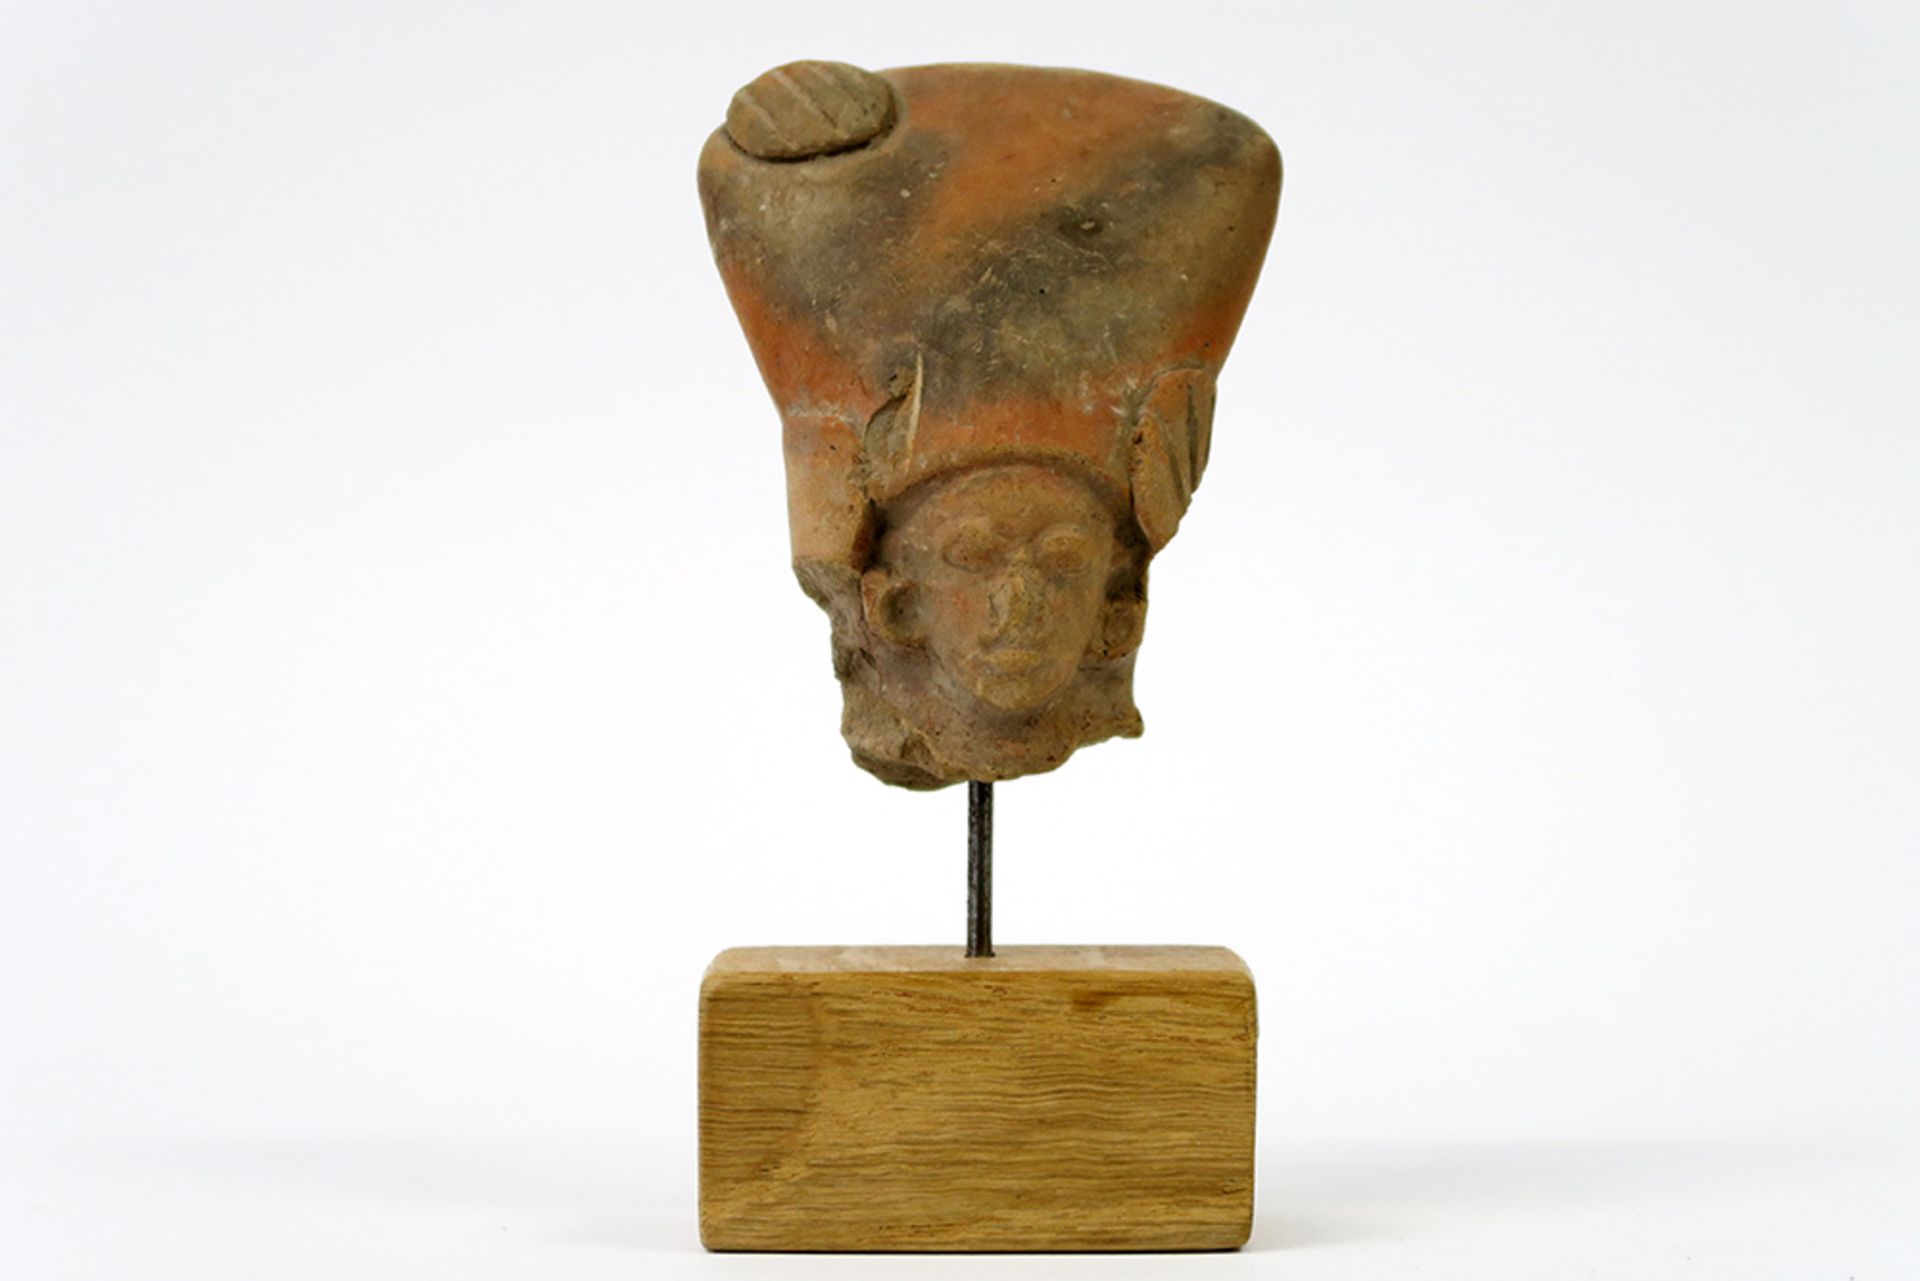 Ecuador Chorrera Culture fragment of a ceramic sculpture : "Head of a noble man" (with elongated